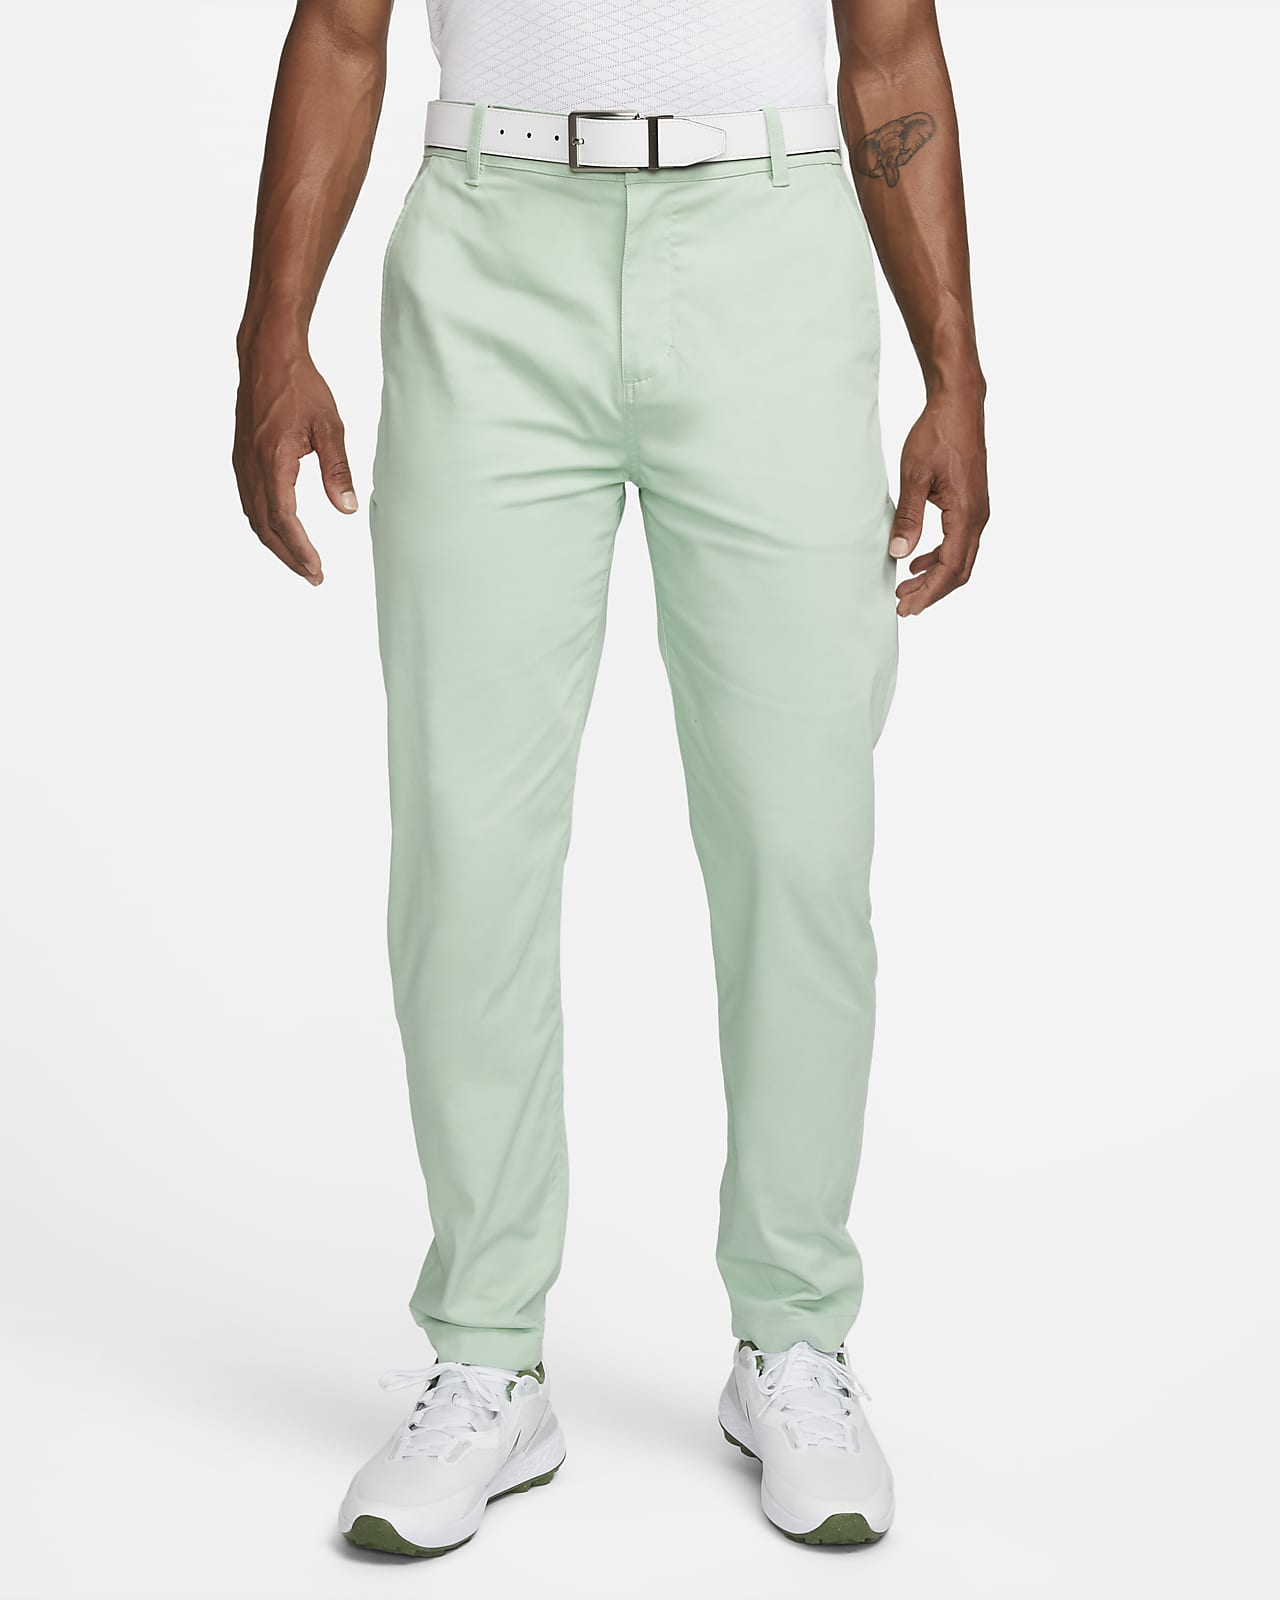 Nike Golf Dri Fit Pants Mens Size 36x30 Polyester Gray Flat Front Golfing